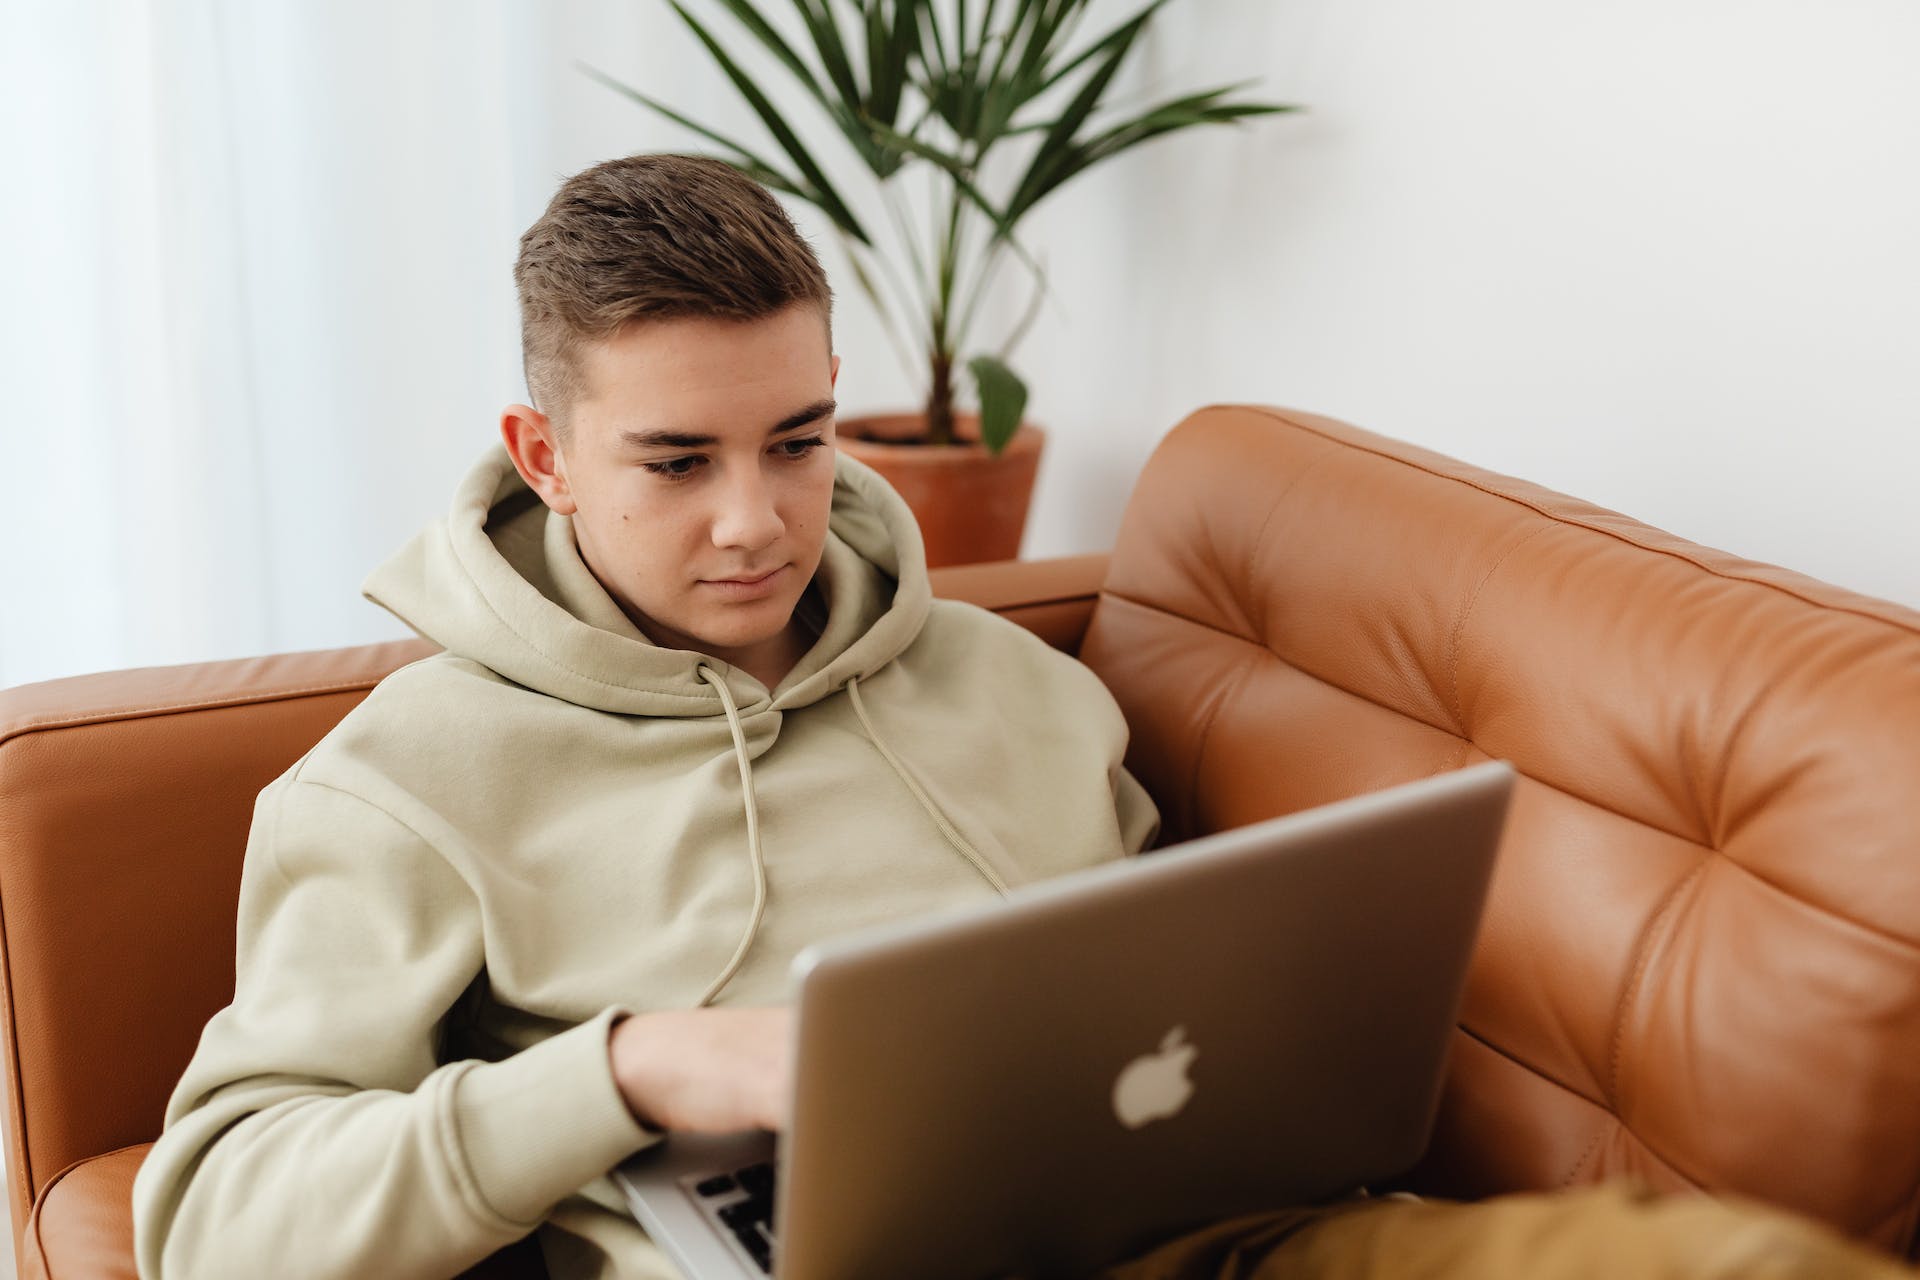 A boy using a laptop | Source: Pexels